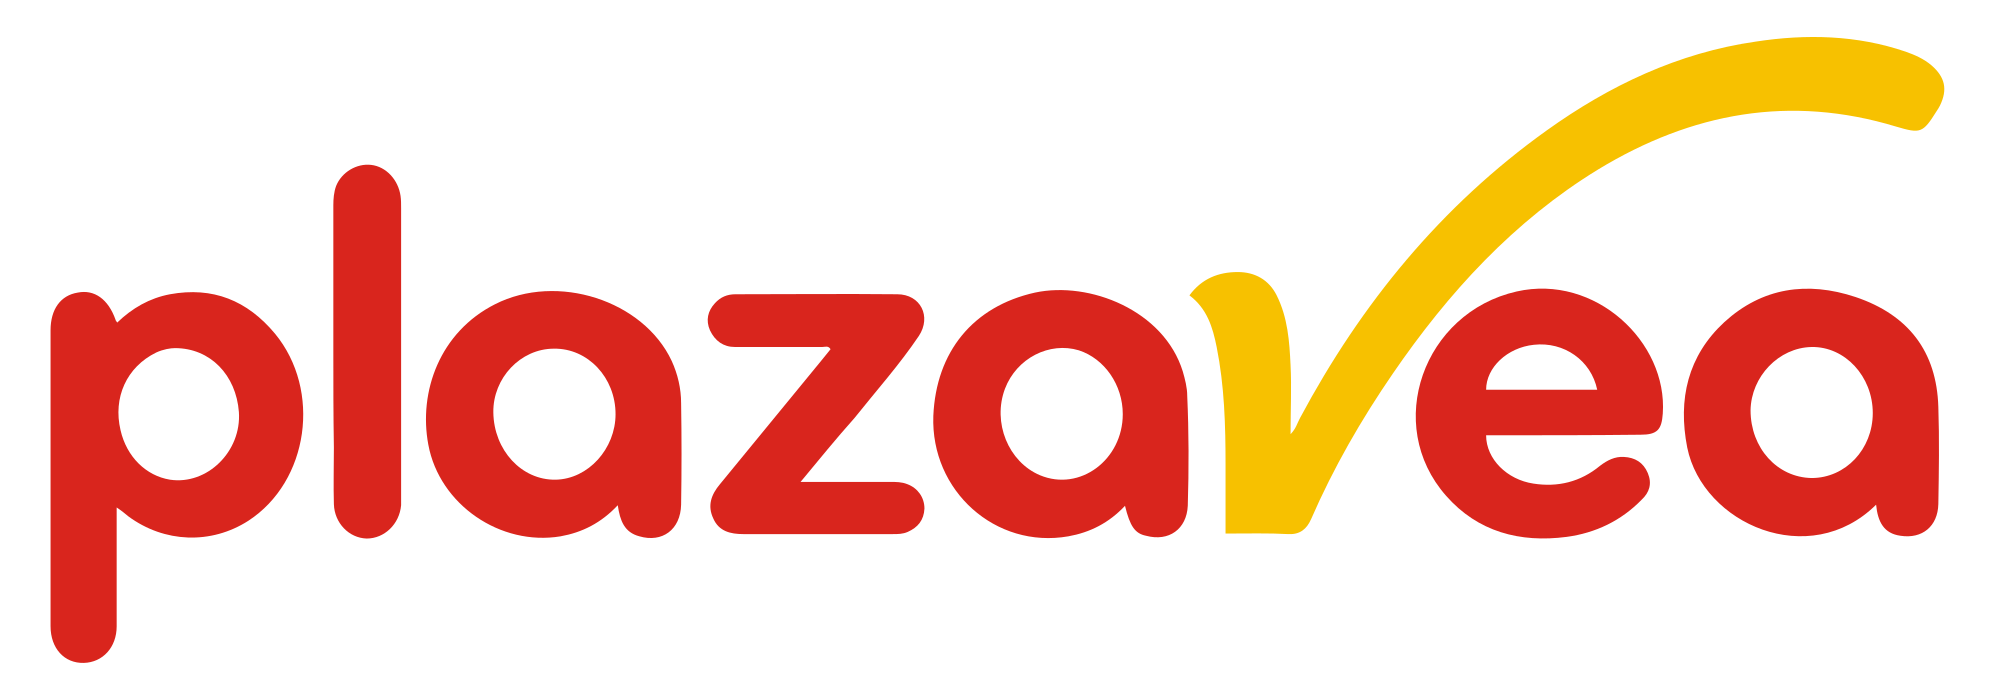 plaza-vea-logo-2000x694-12518.png